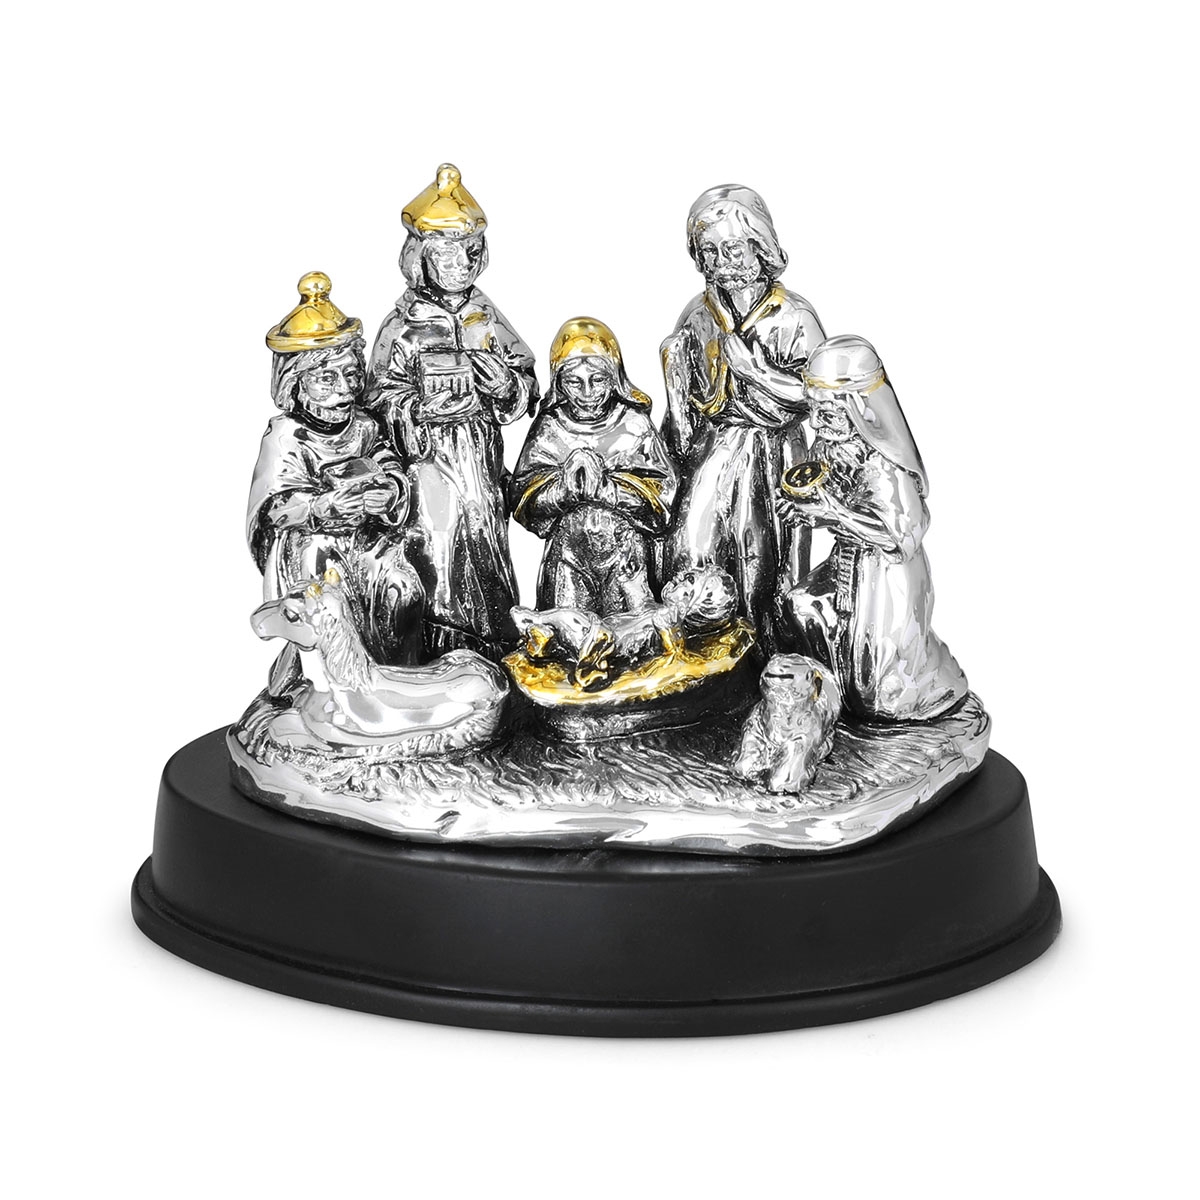 Gold-Accented Nativity Scene Figurine - 1